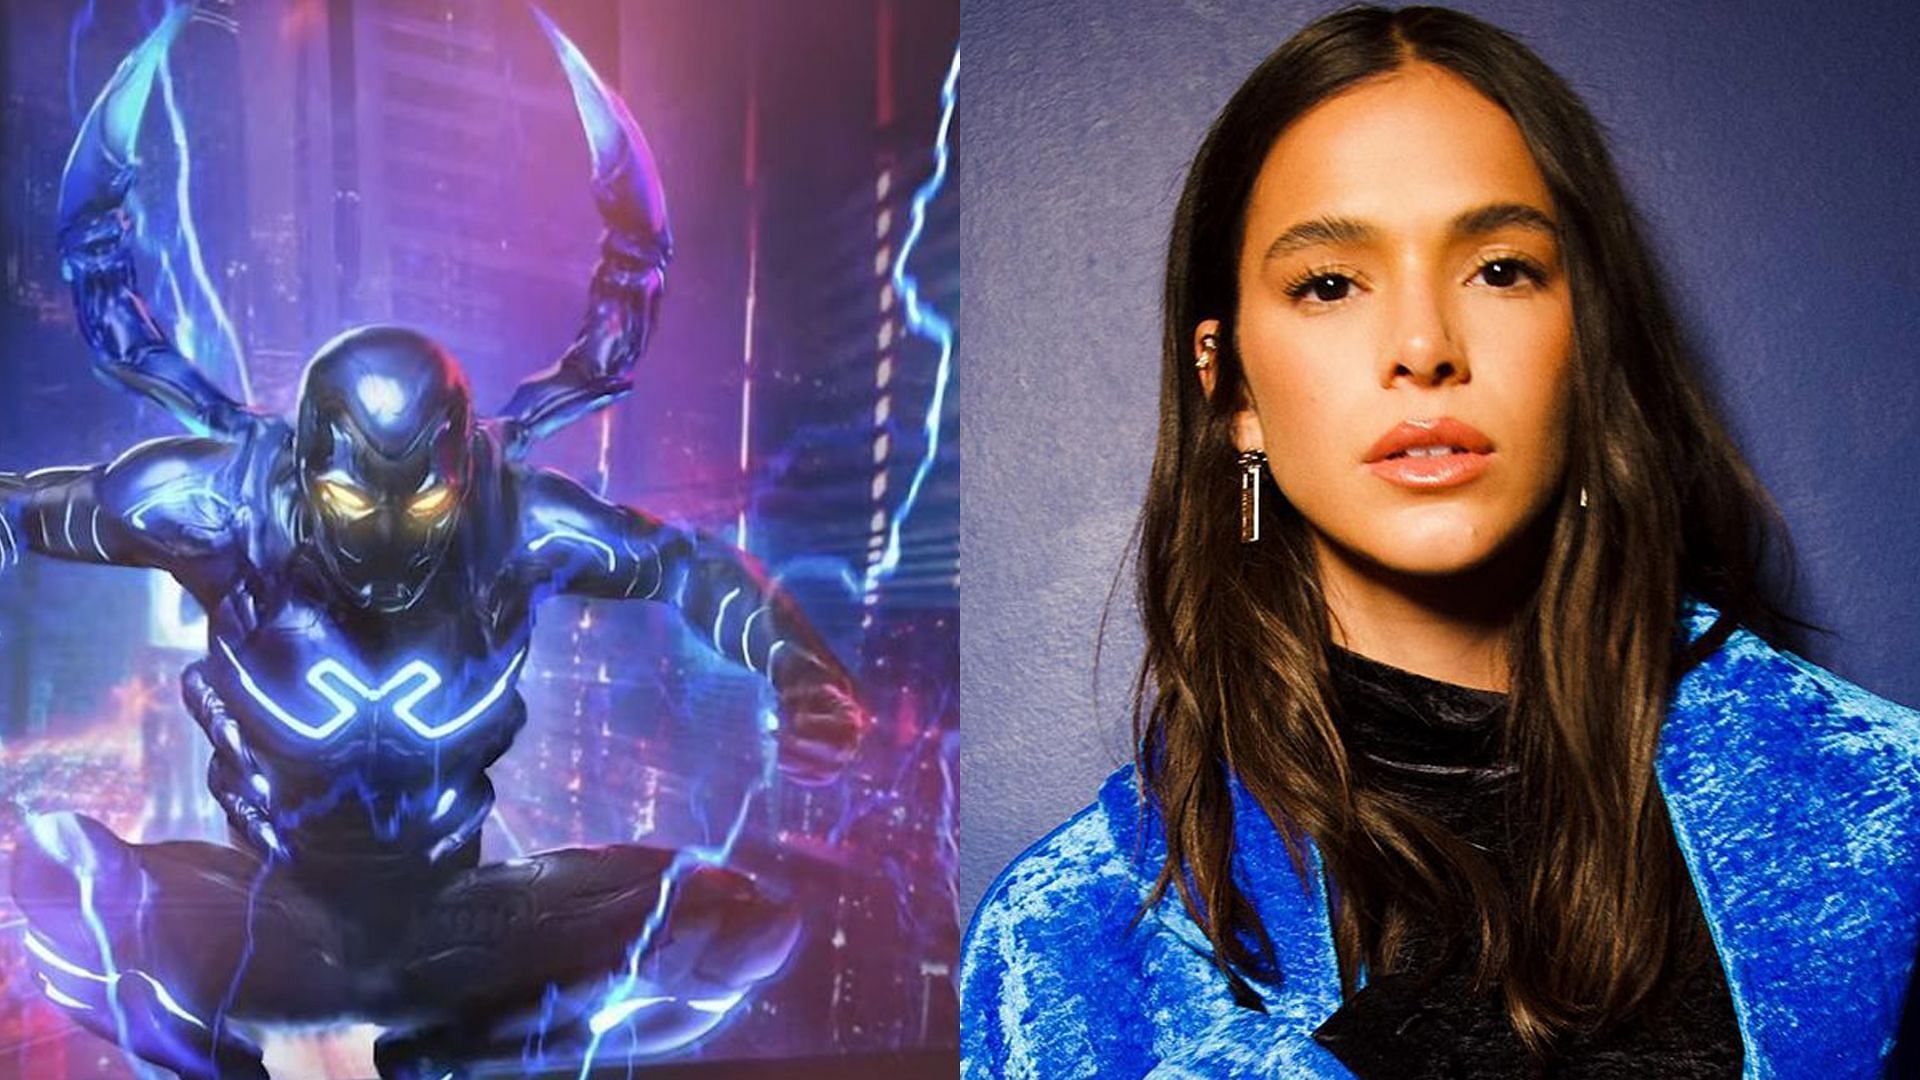 Bruna Marquezine joins the DC Universe with Blue Beetle